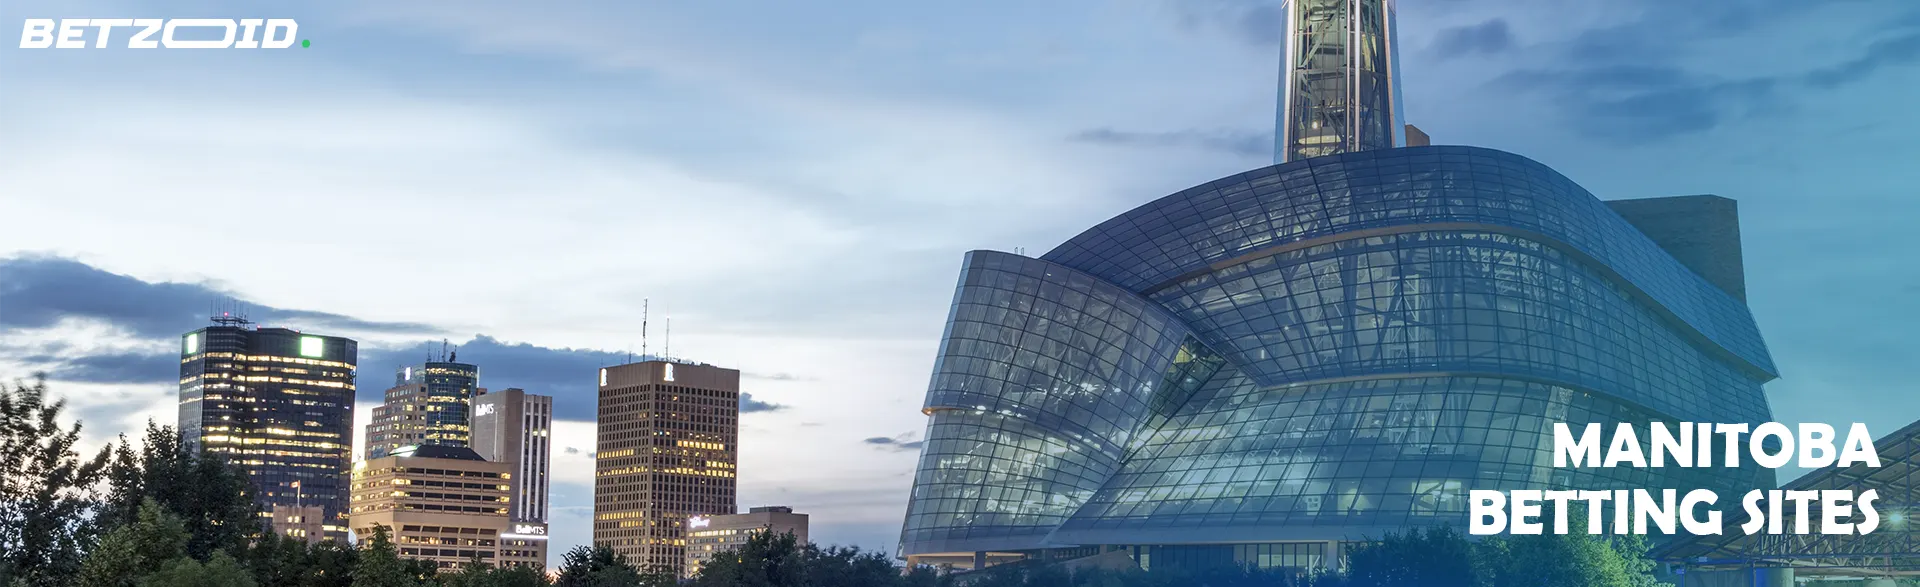 Skyline of Winnipeg, Manitoba with modern buildings, highlighting the urban environment of Manitoba sportsbooks.